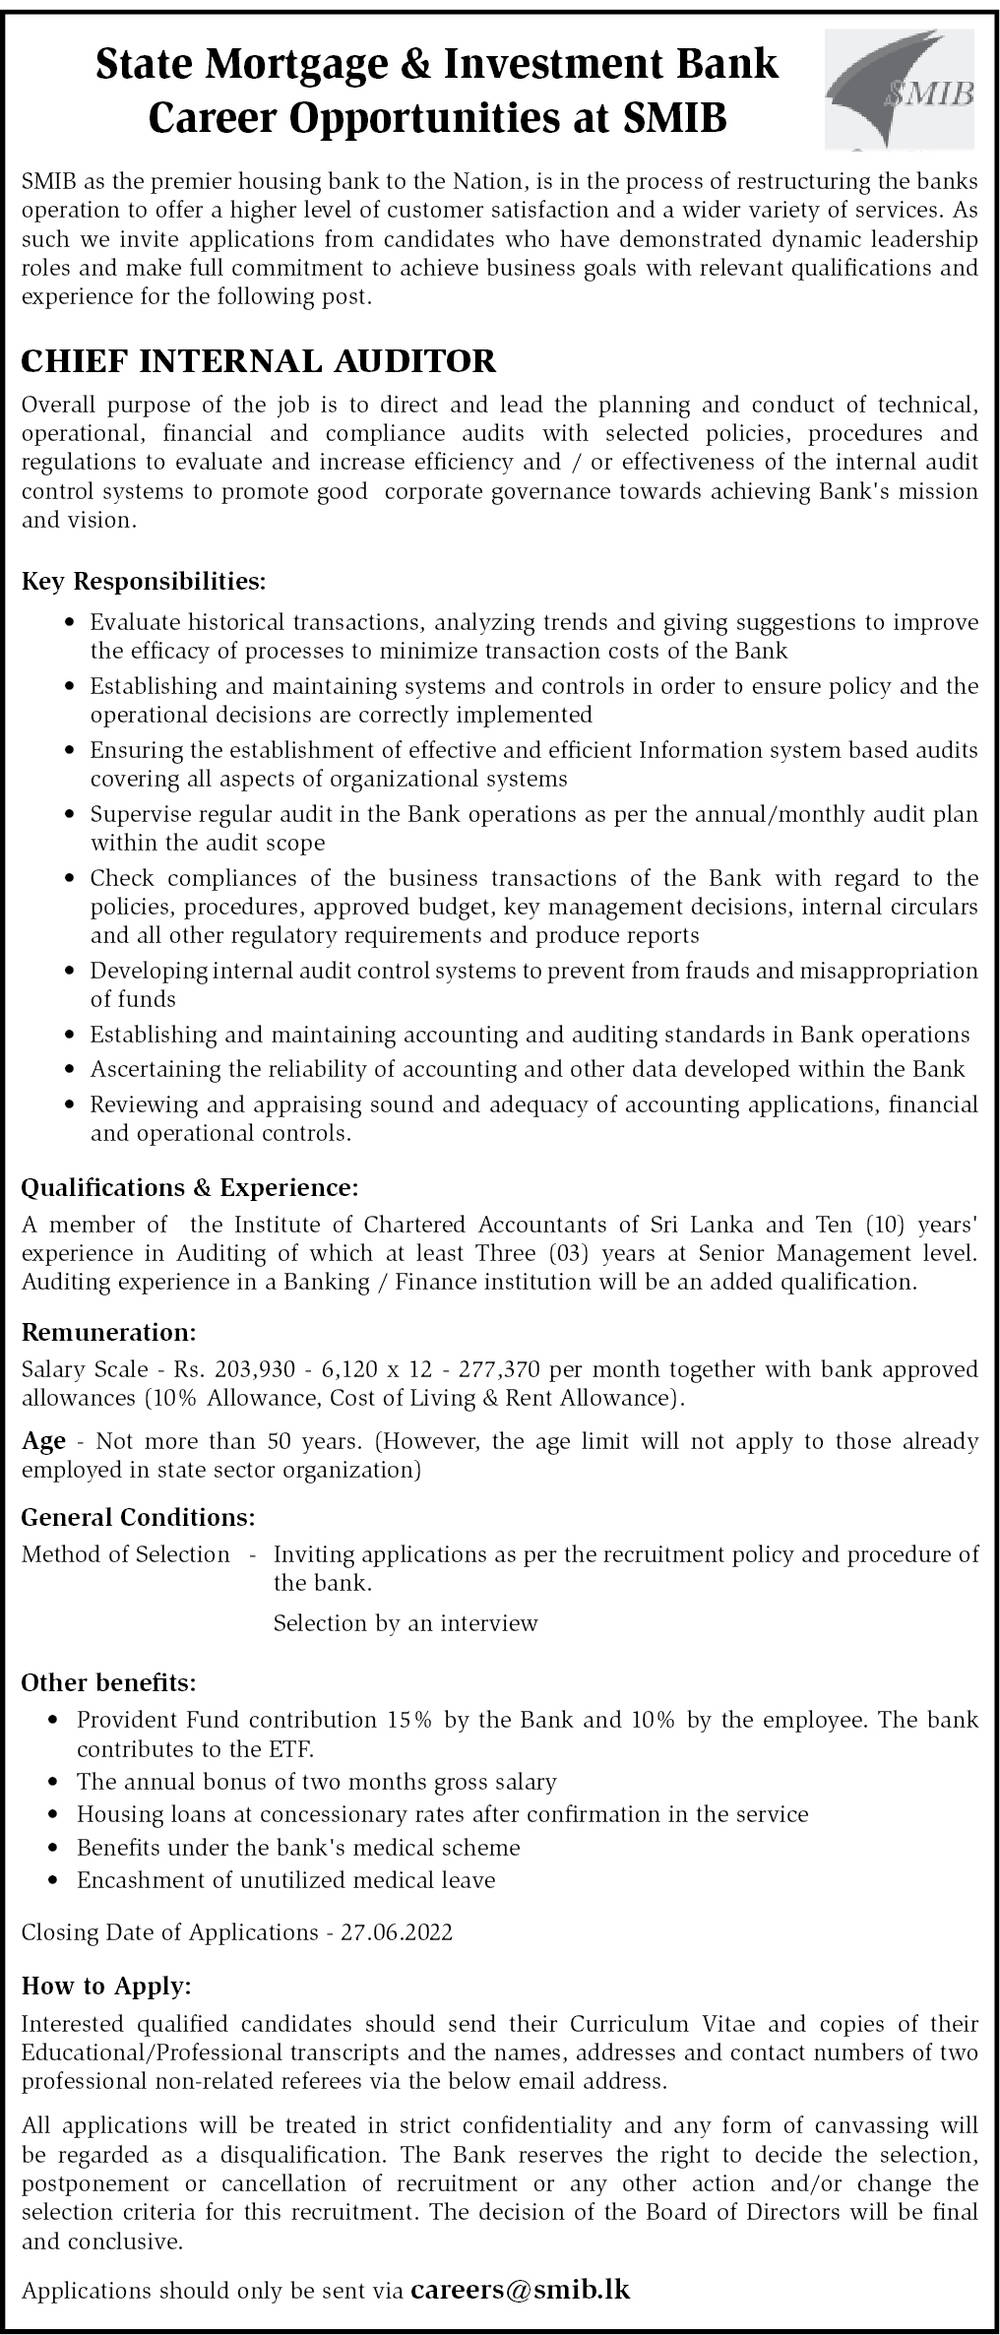 Chief Internal Auditor Job Vacancy - SMIB Bank Jobs Vacancies Details